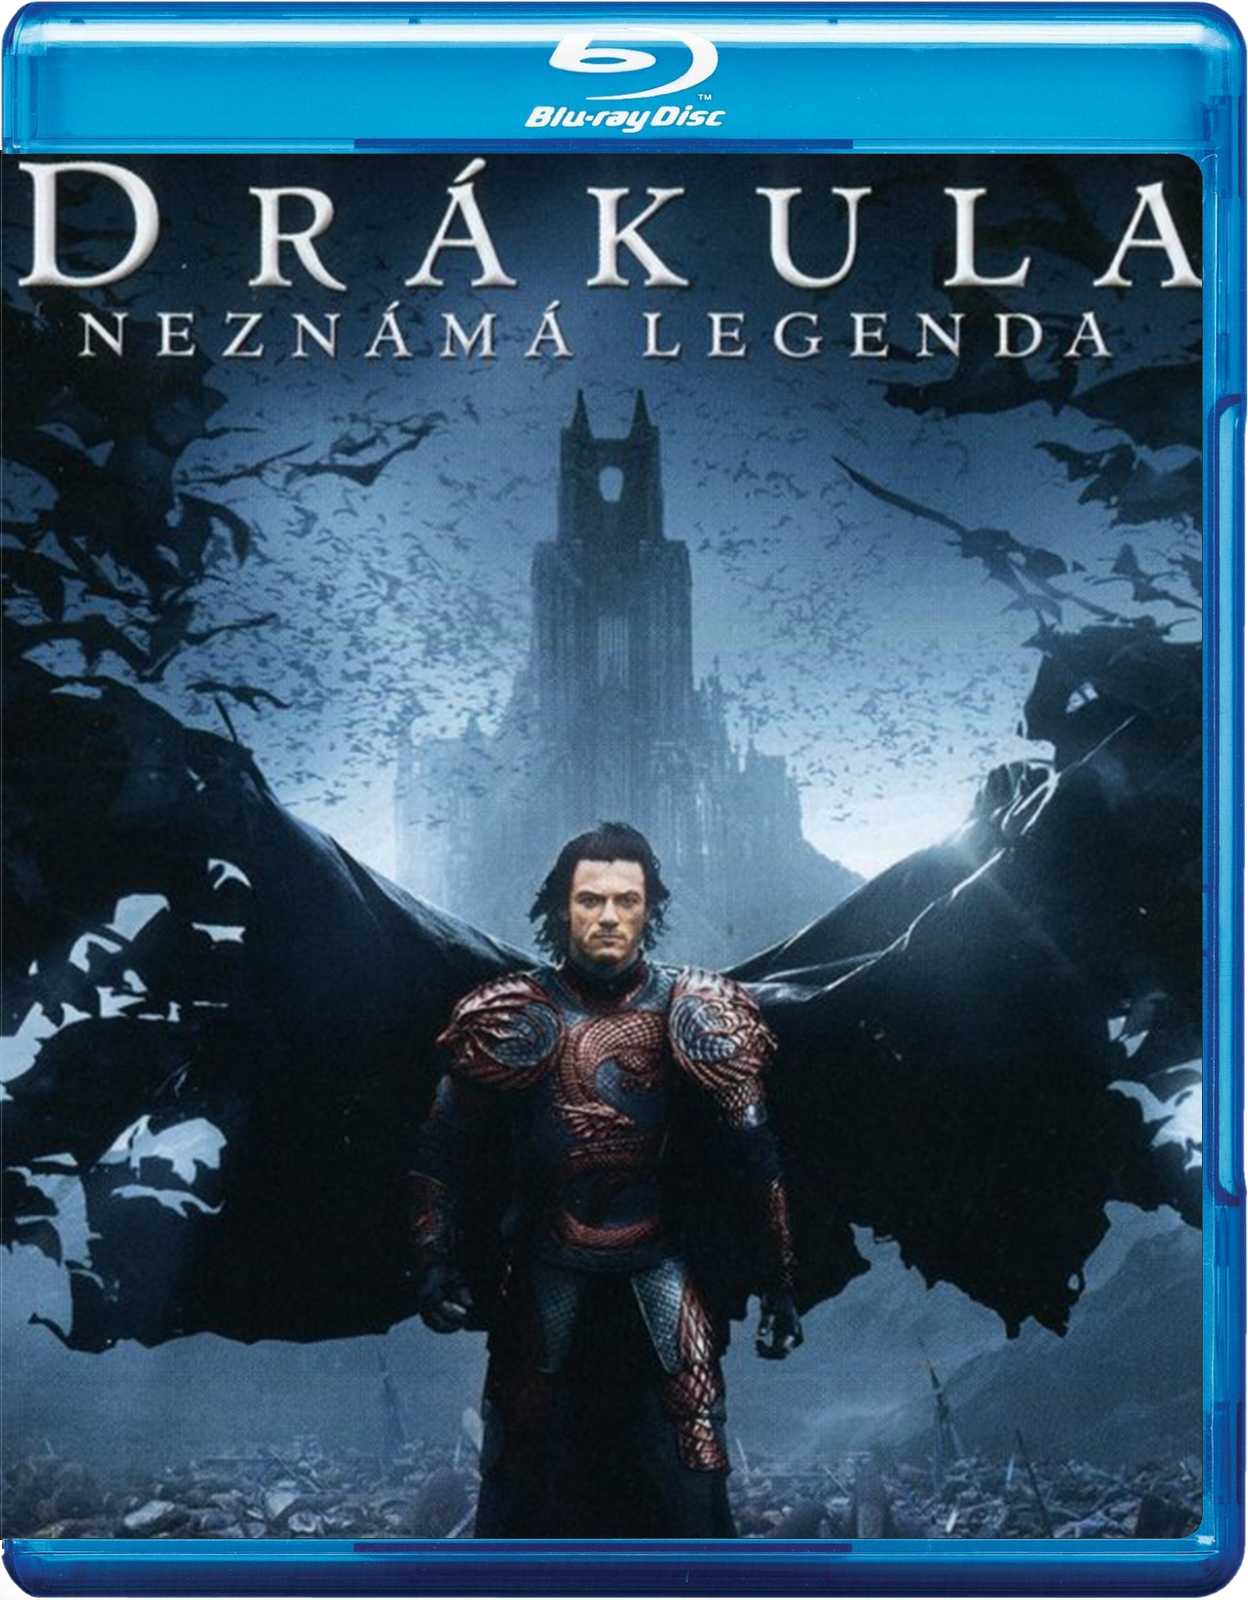 Stiahni si HD Filmy Drakula: Neznama legenda / Dracula Untold (2014)(CZ/EN)[1080pHD] = CSFD 63%